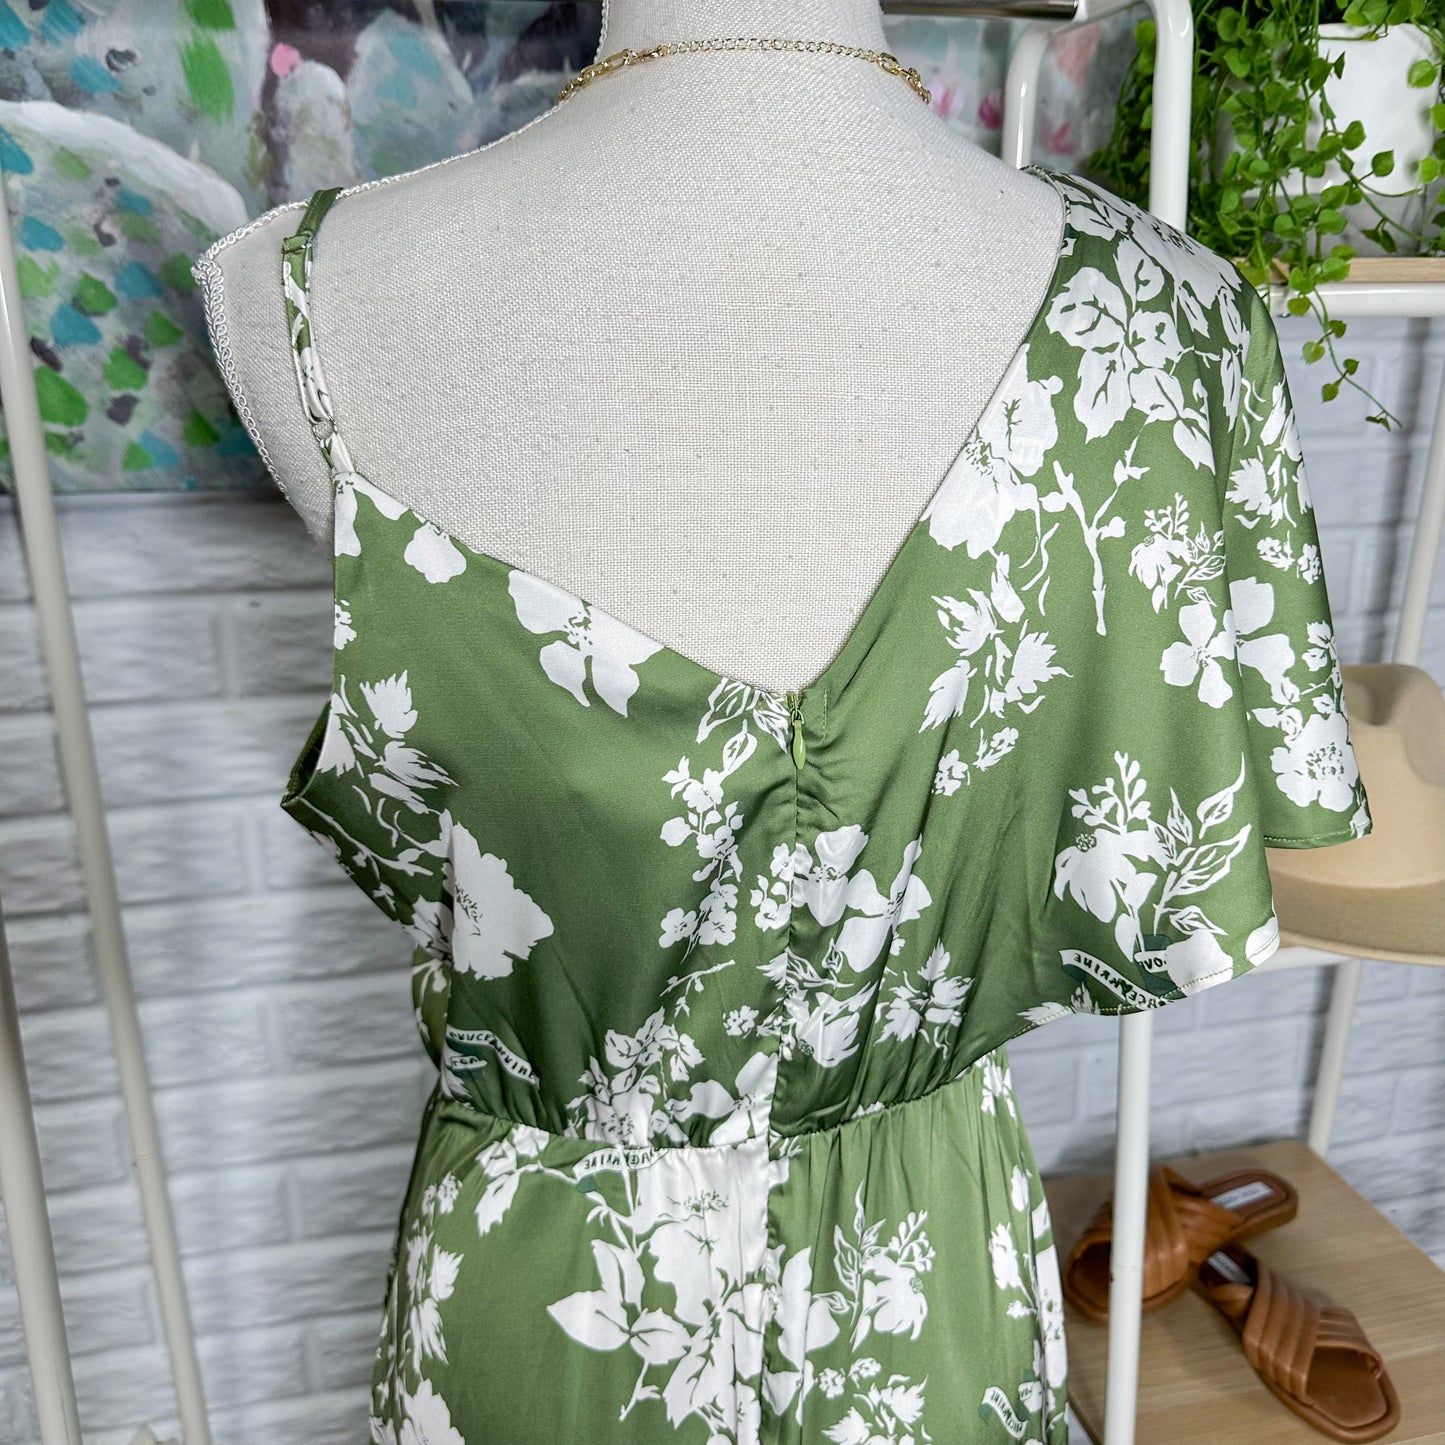 Grace Karin New Satin Green Floral Midi Dress Size Medium